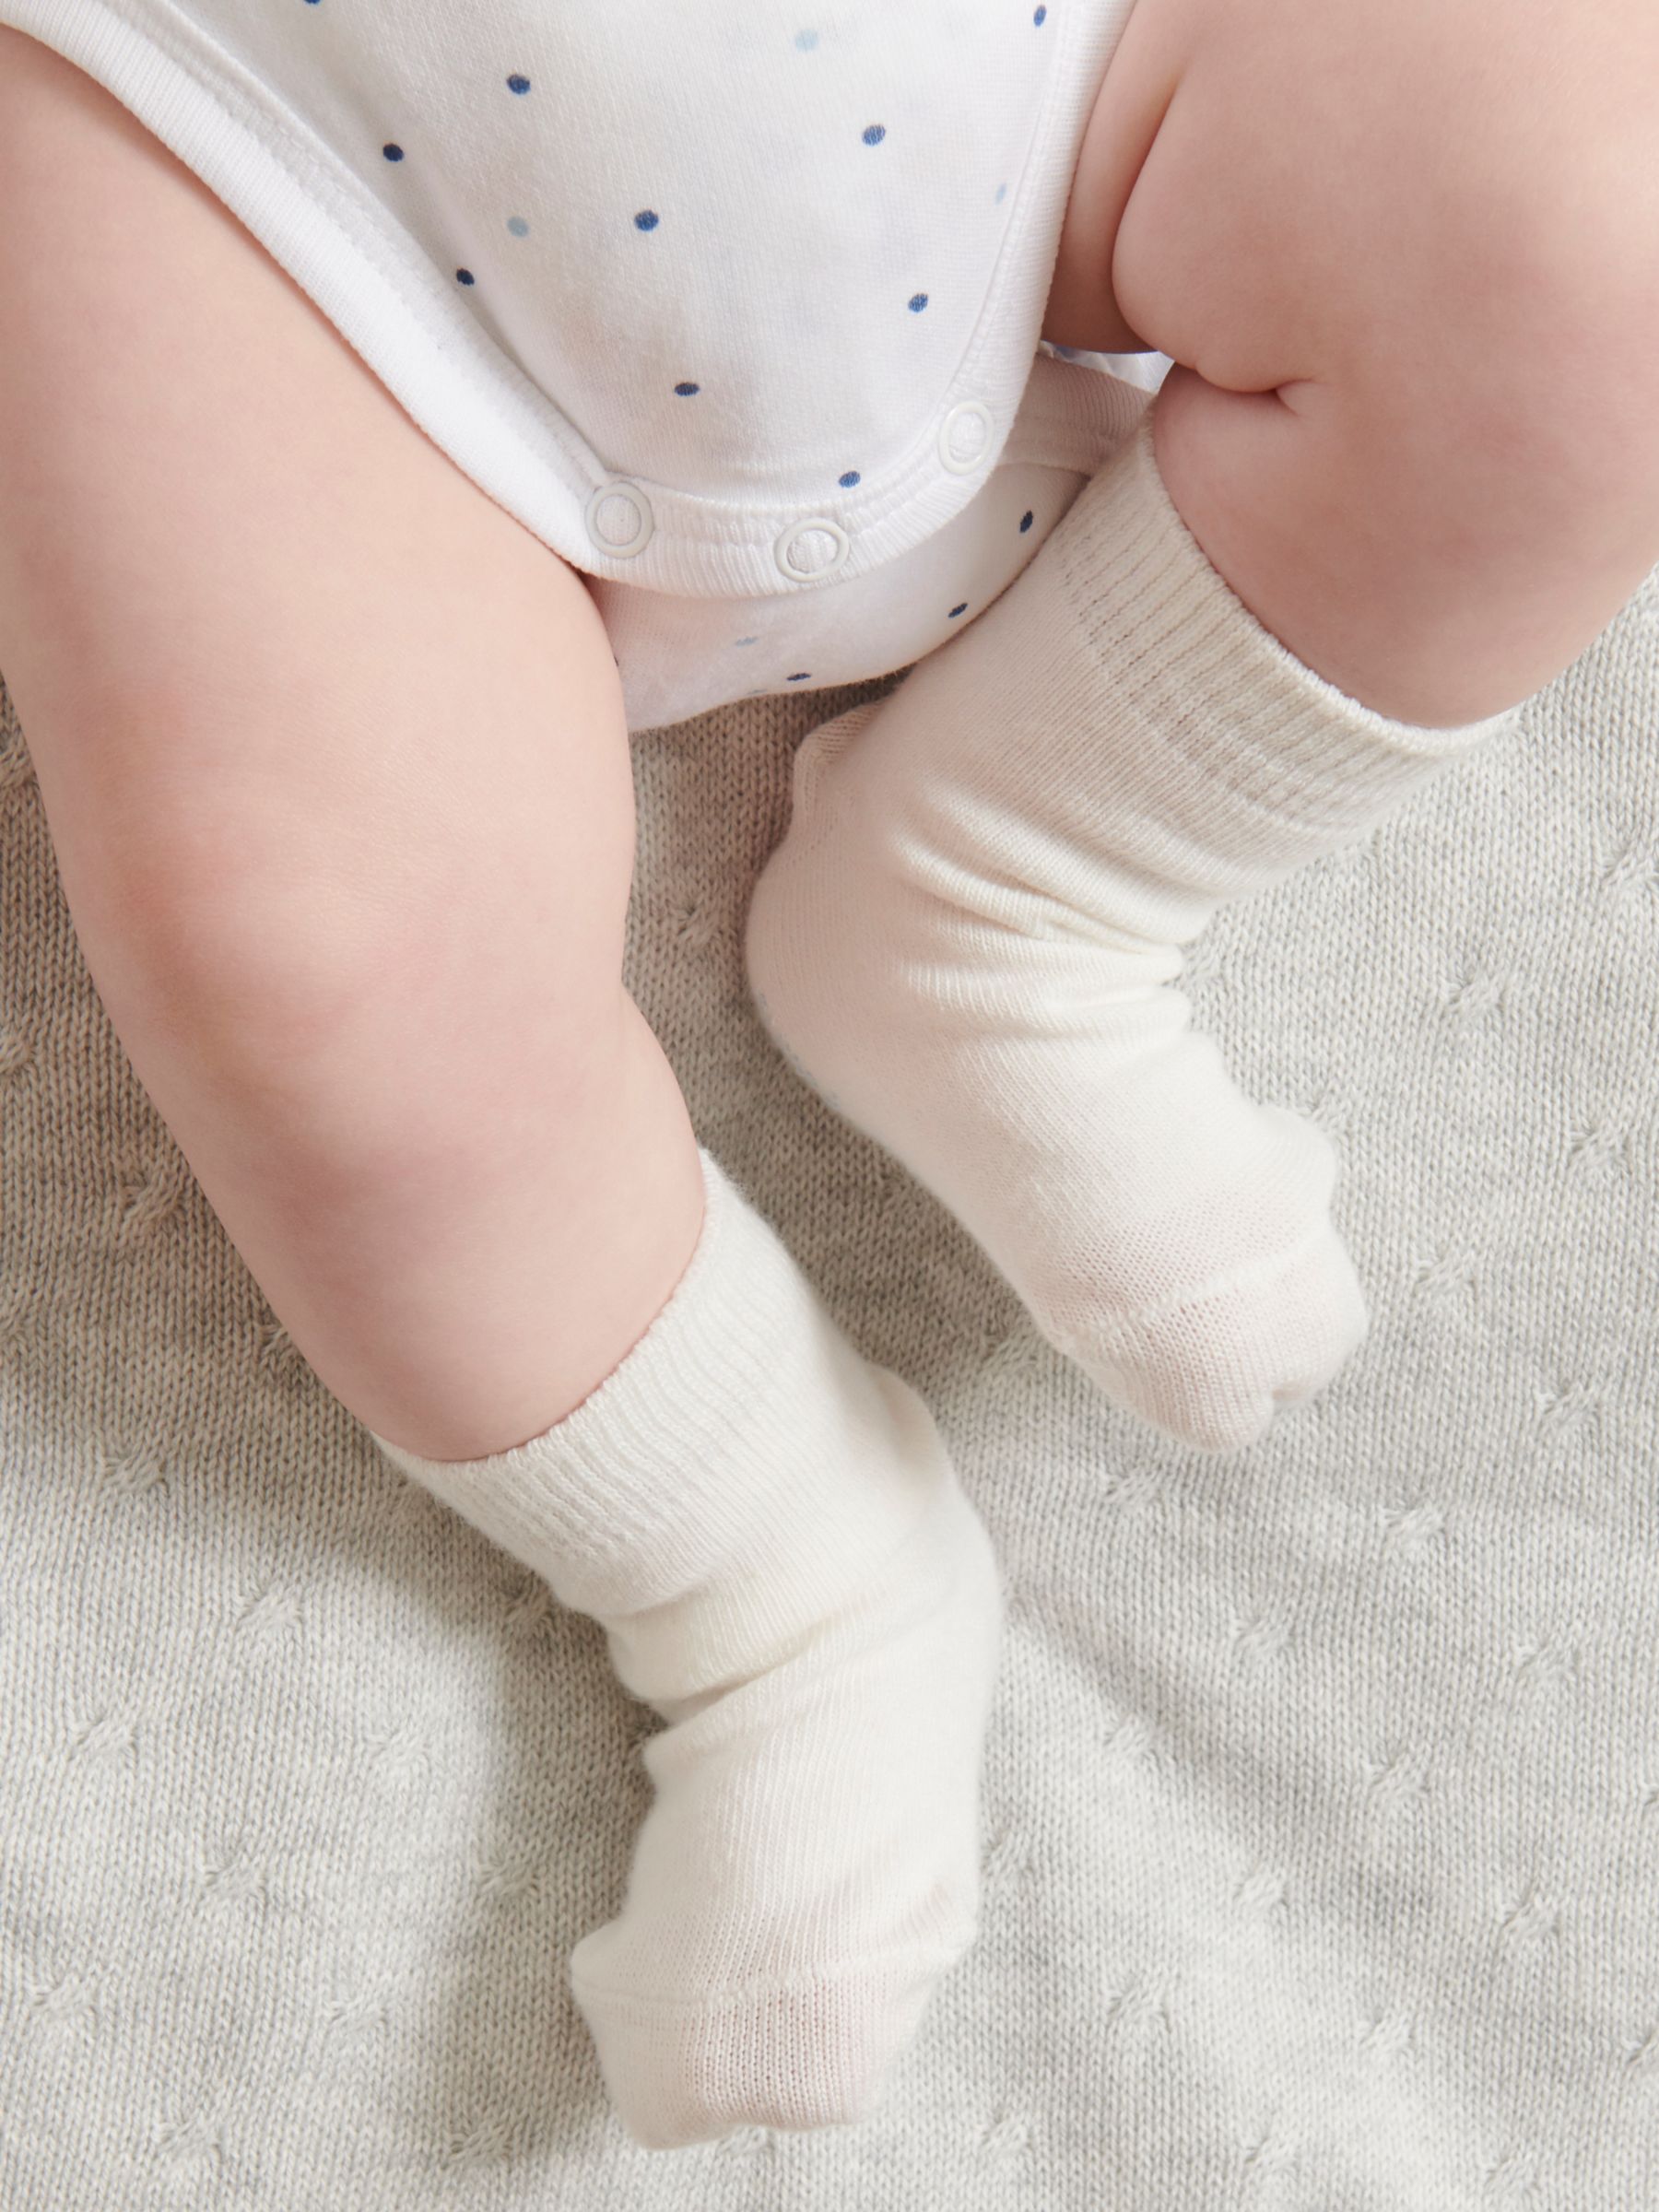 Purebaby Socks, Pack of 3, Blue, 0-3 months